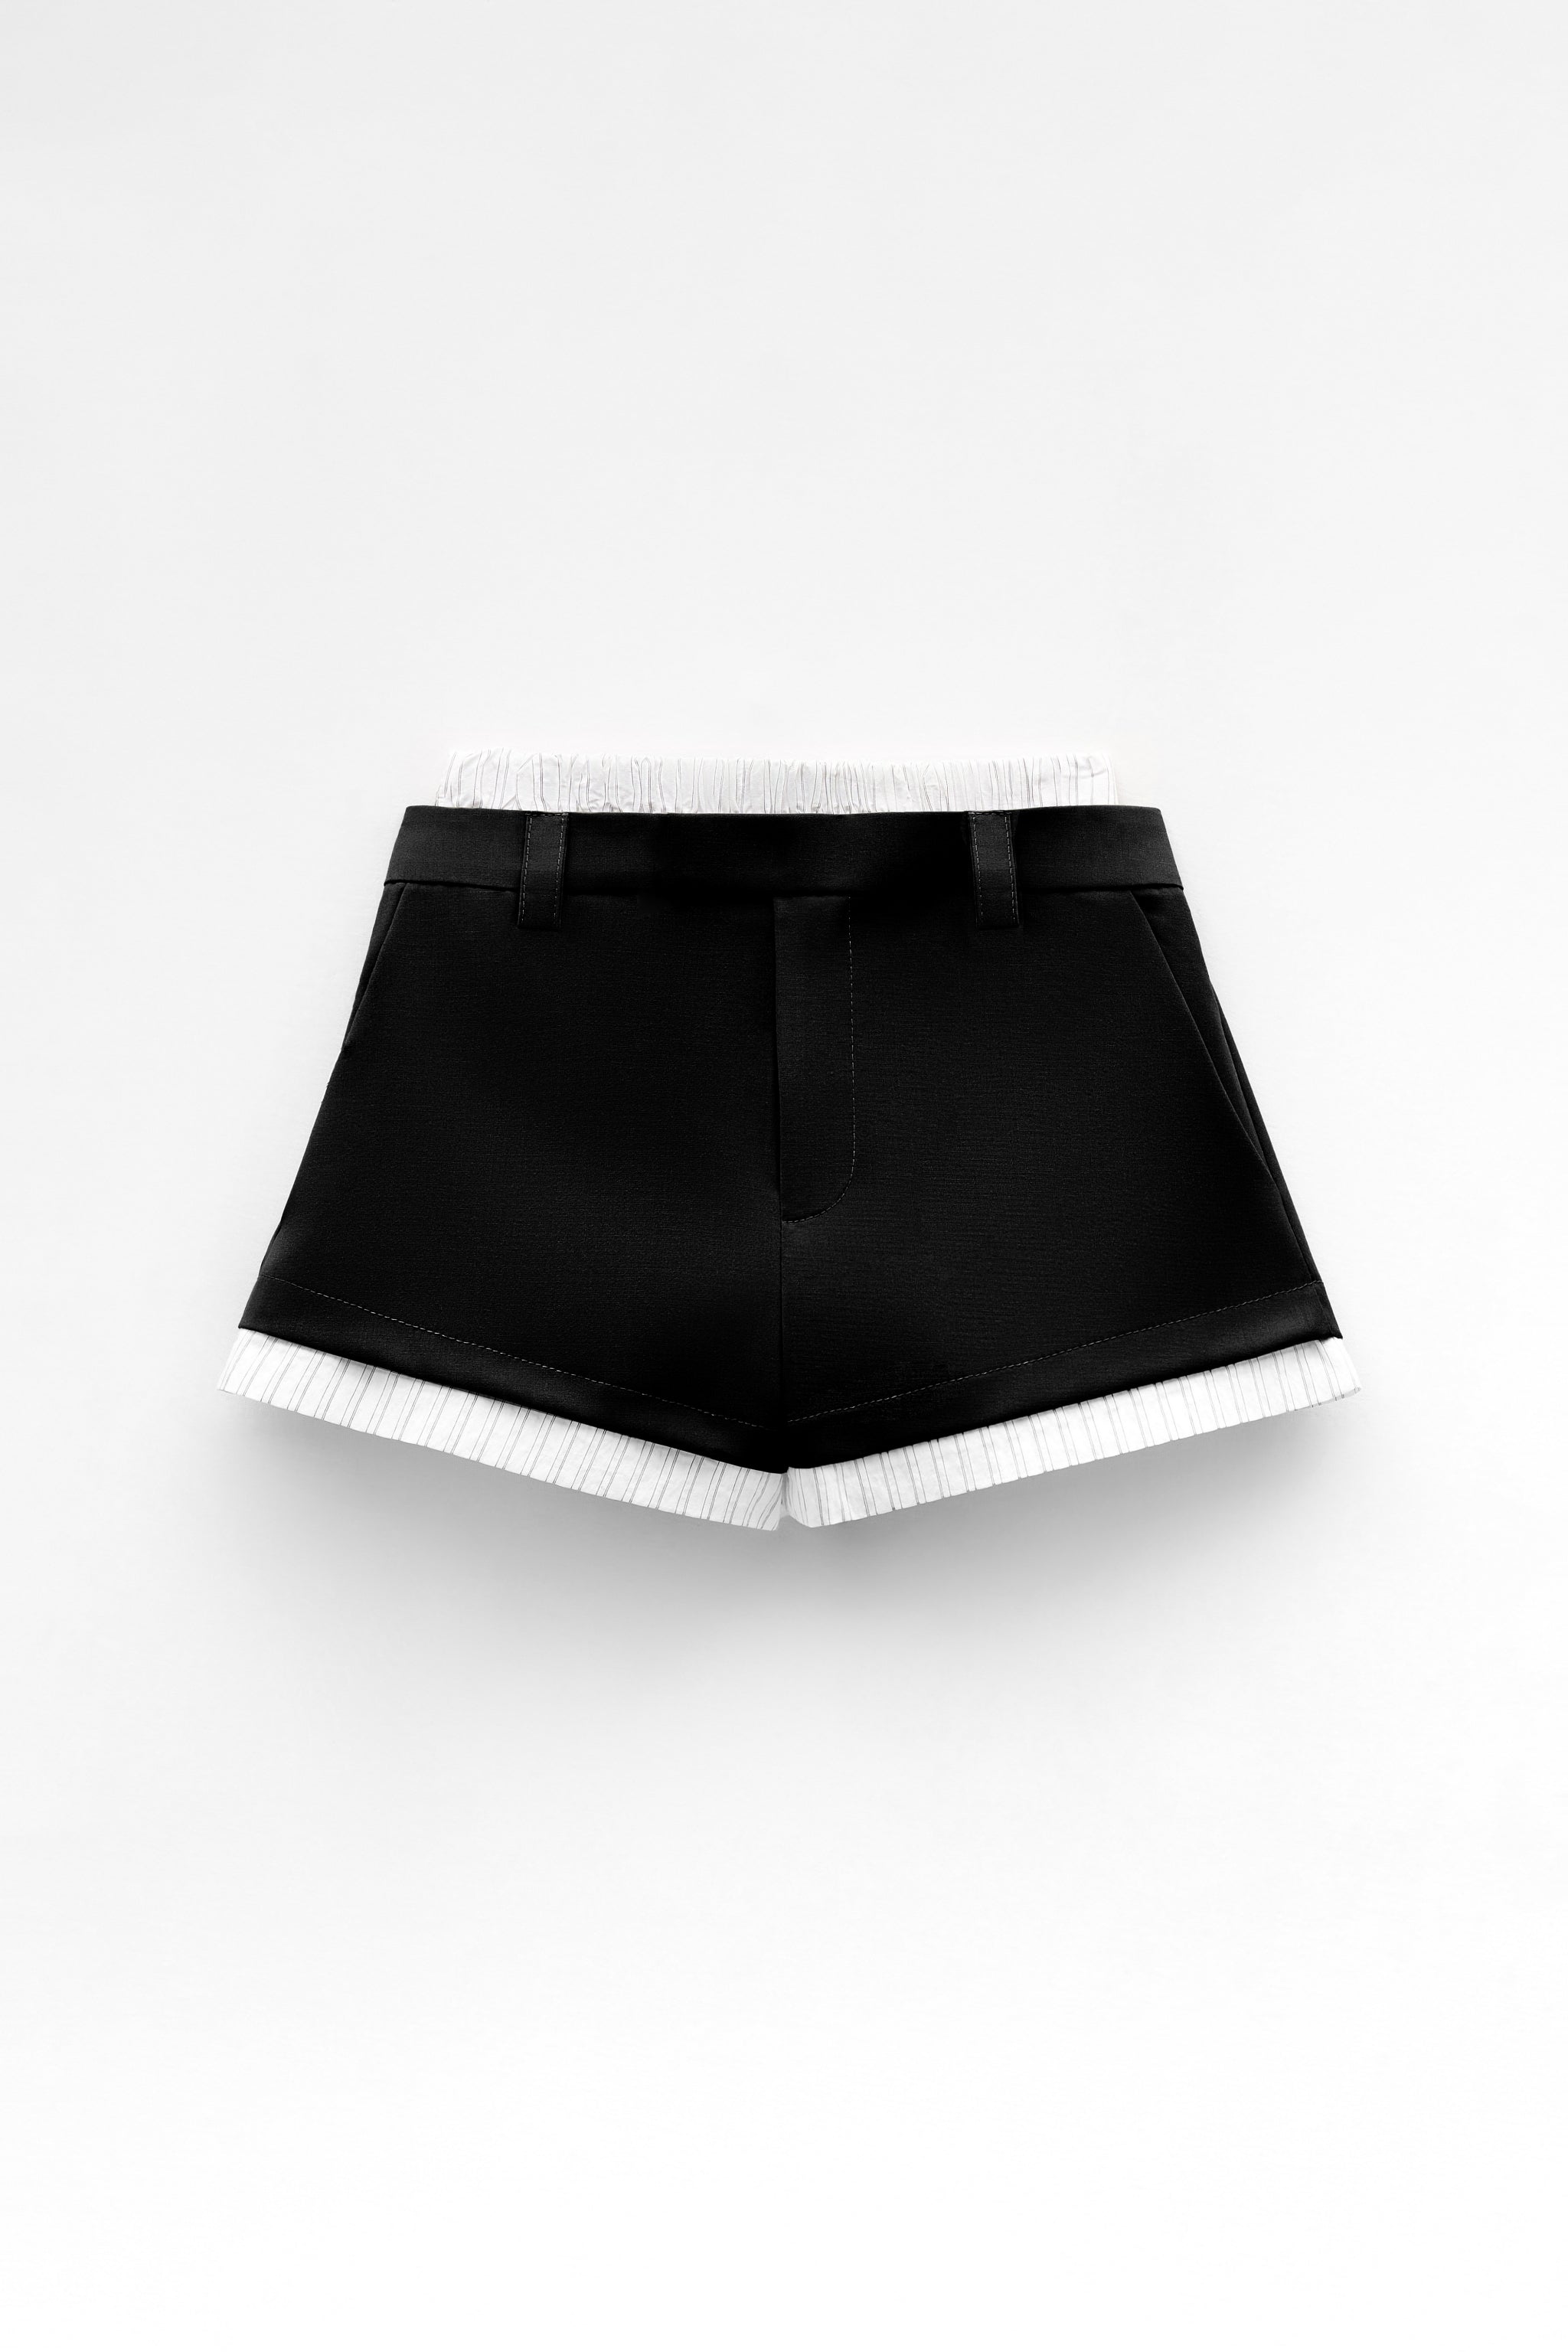 SORENSON Boxer Shorts